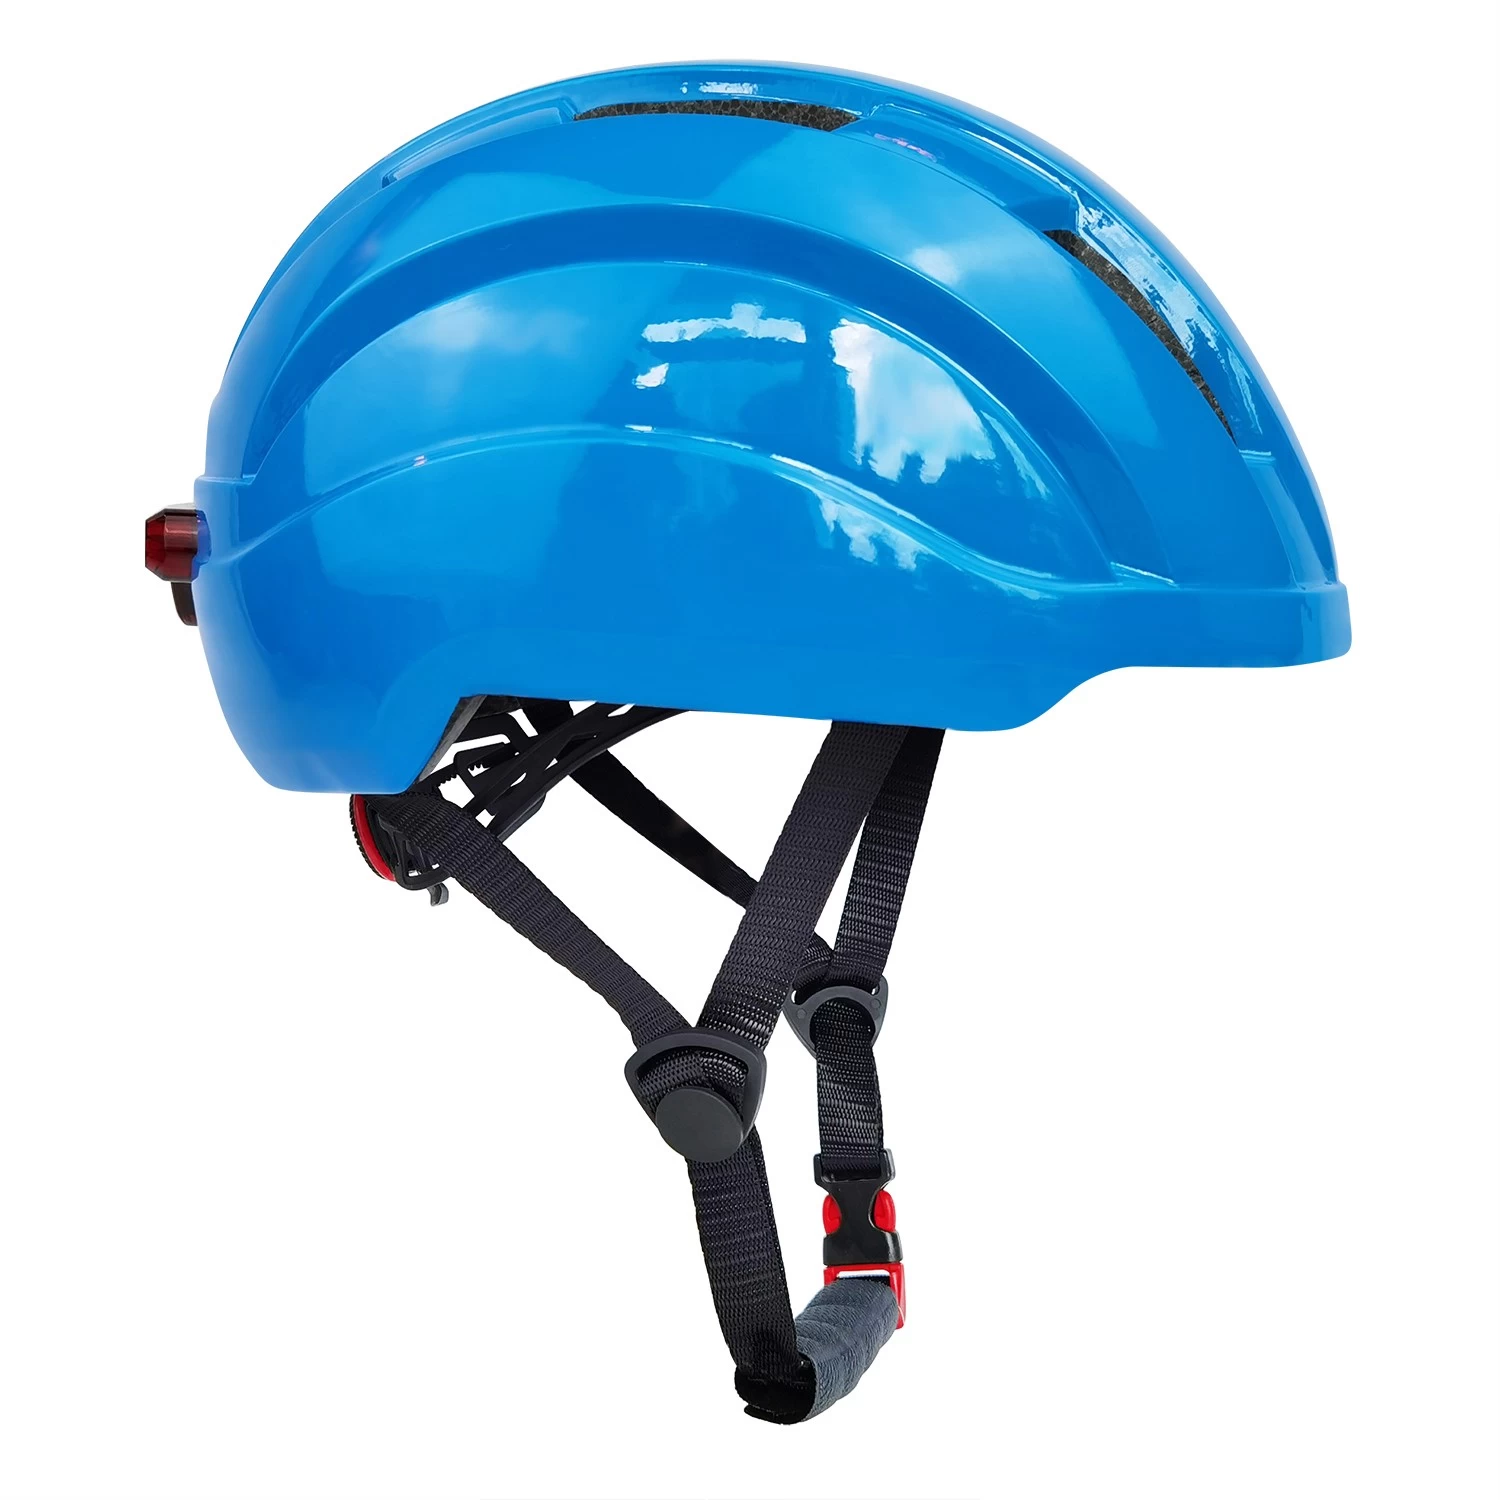 LED road bike helmet